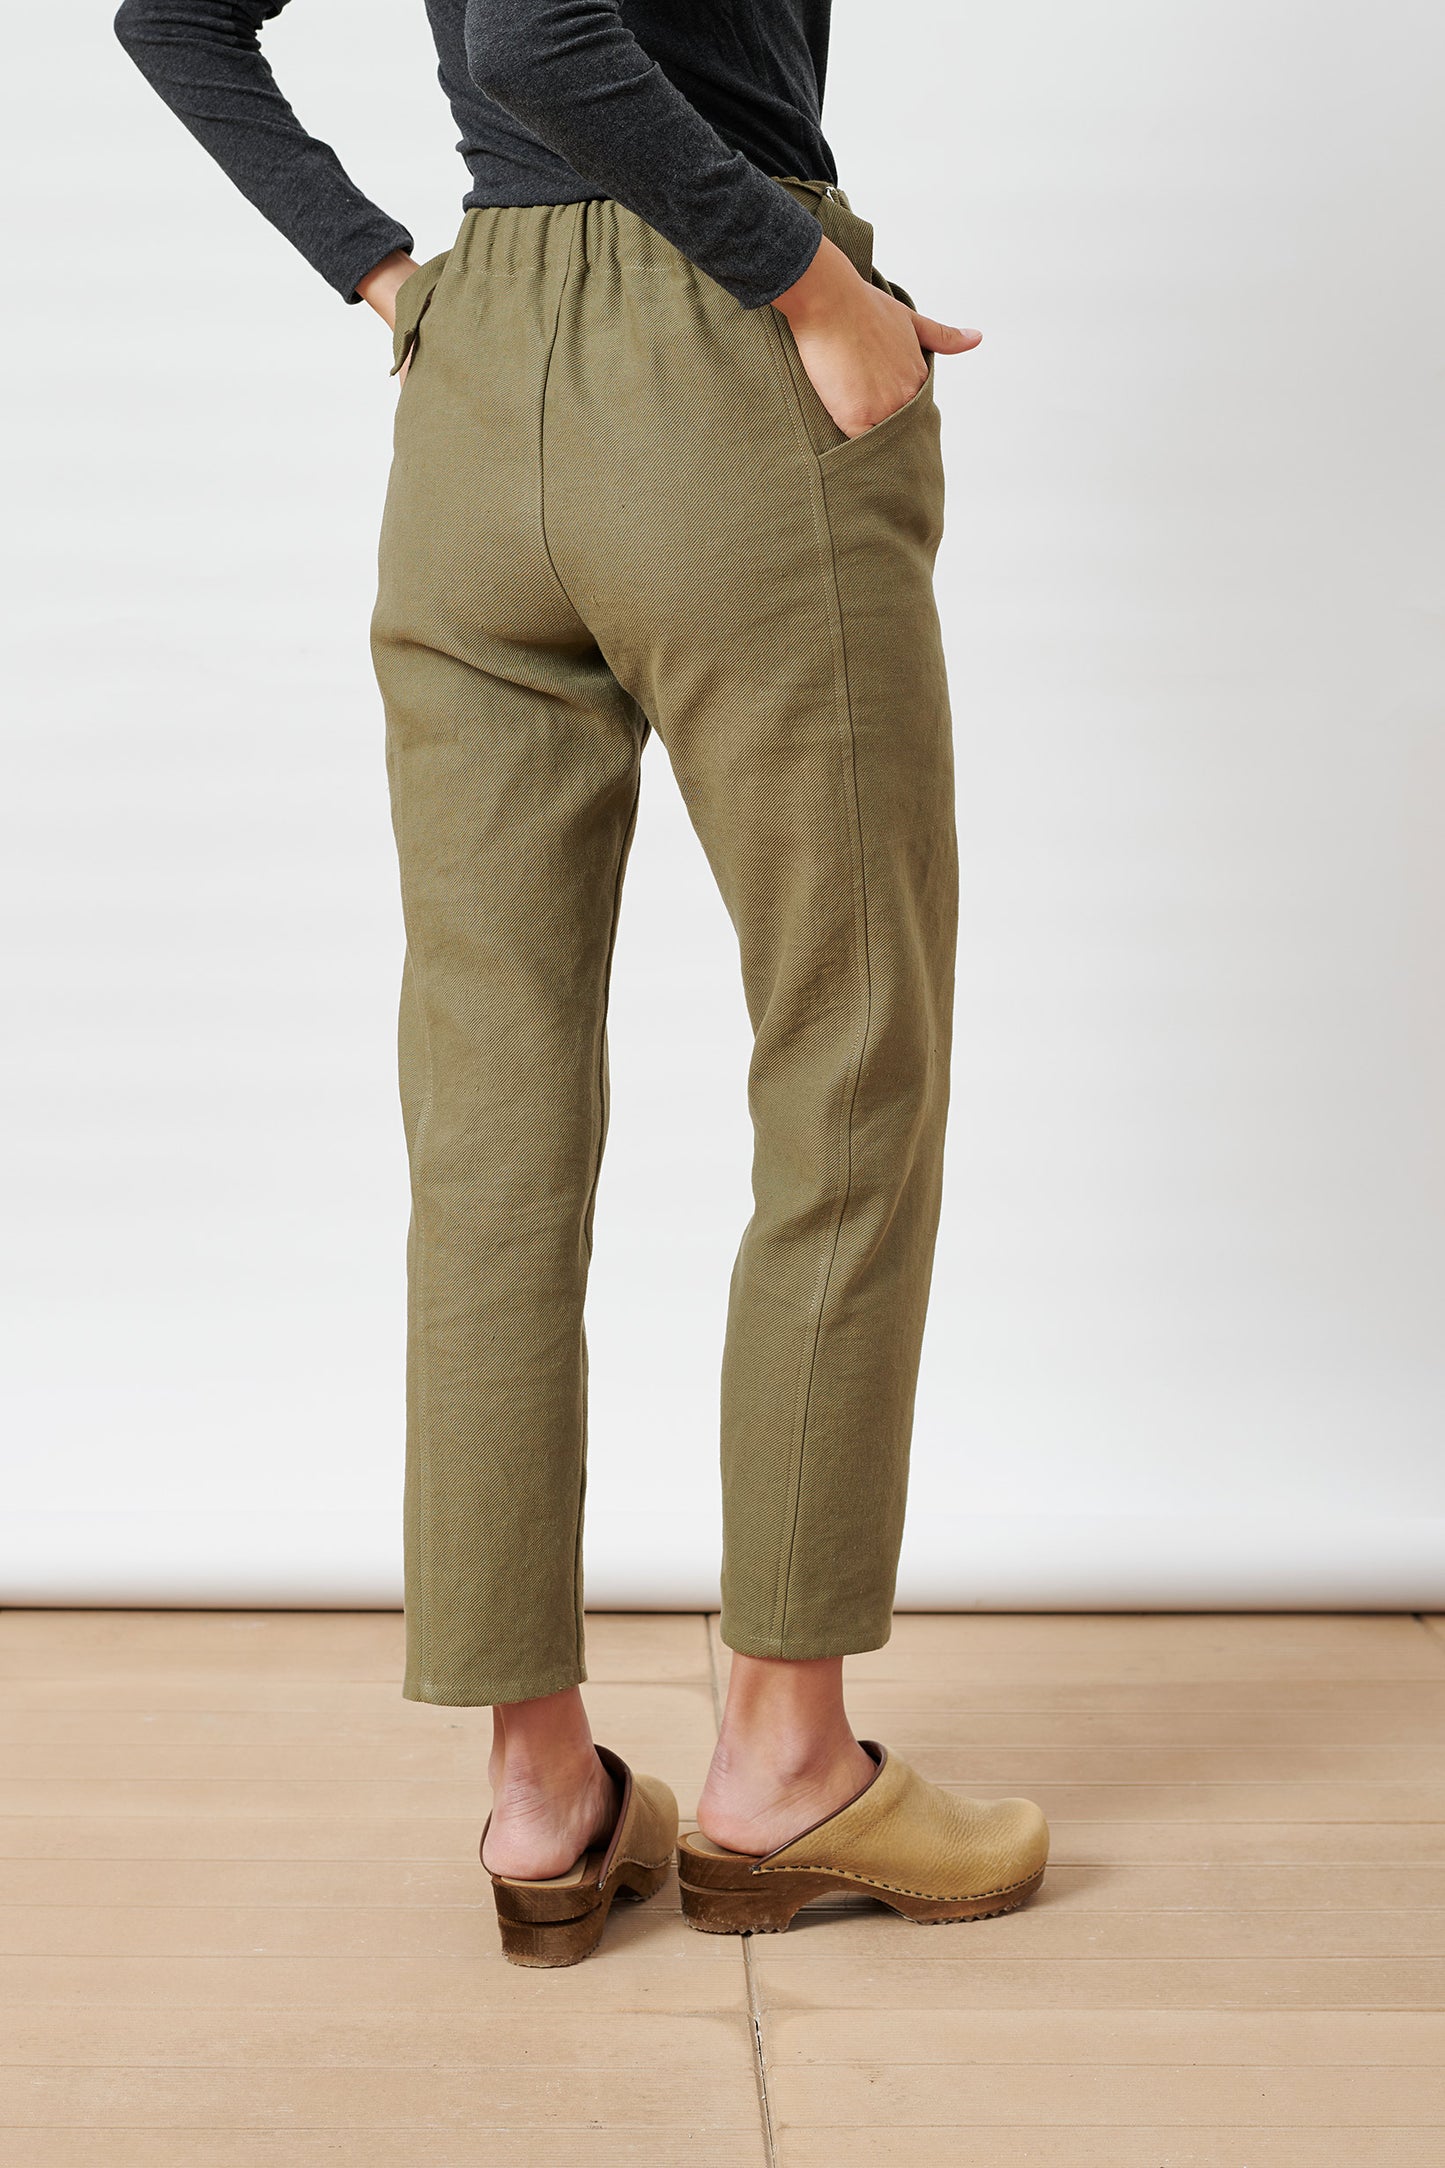 Dafne 2.0 - Pantalone regolabile color Verde Oliva